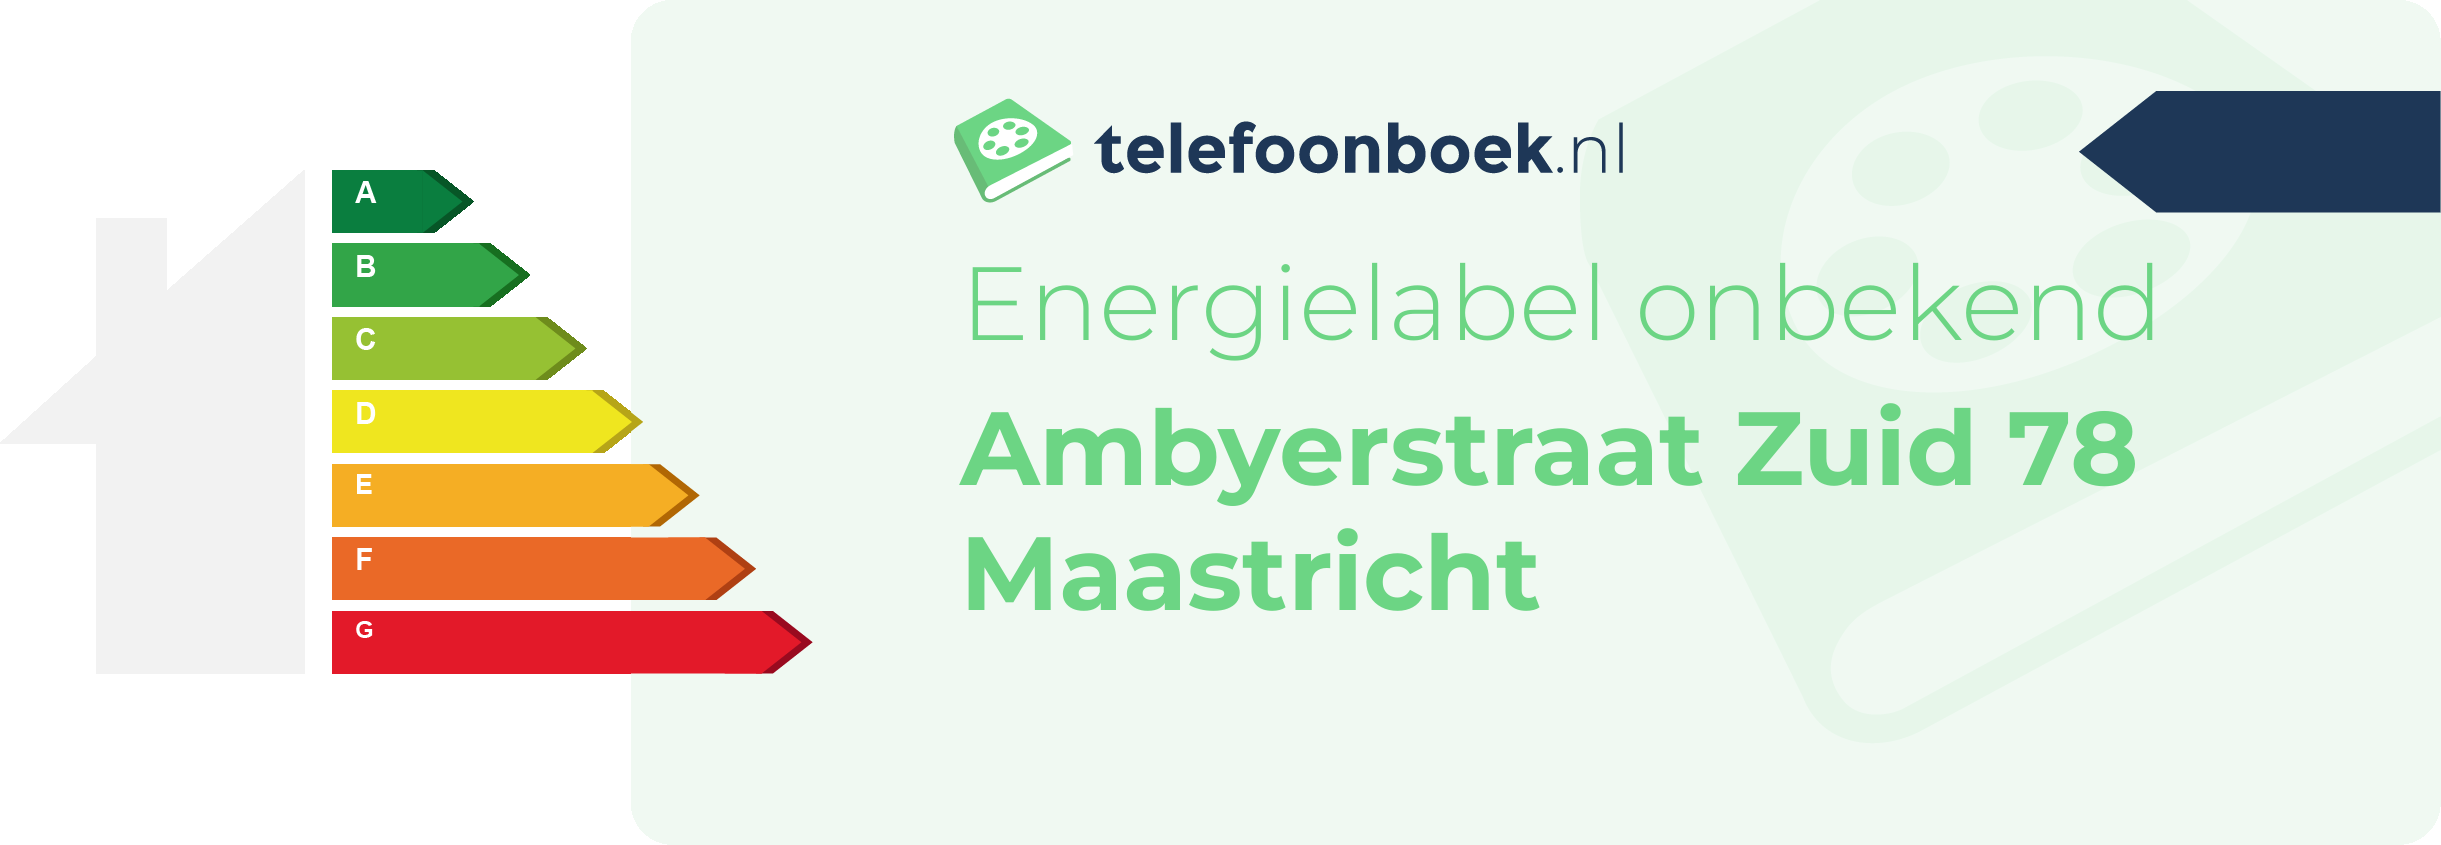 Energielabel Ambyerstraat Zuid 78 Maastricht